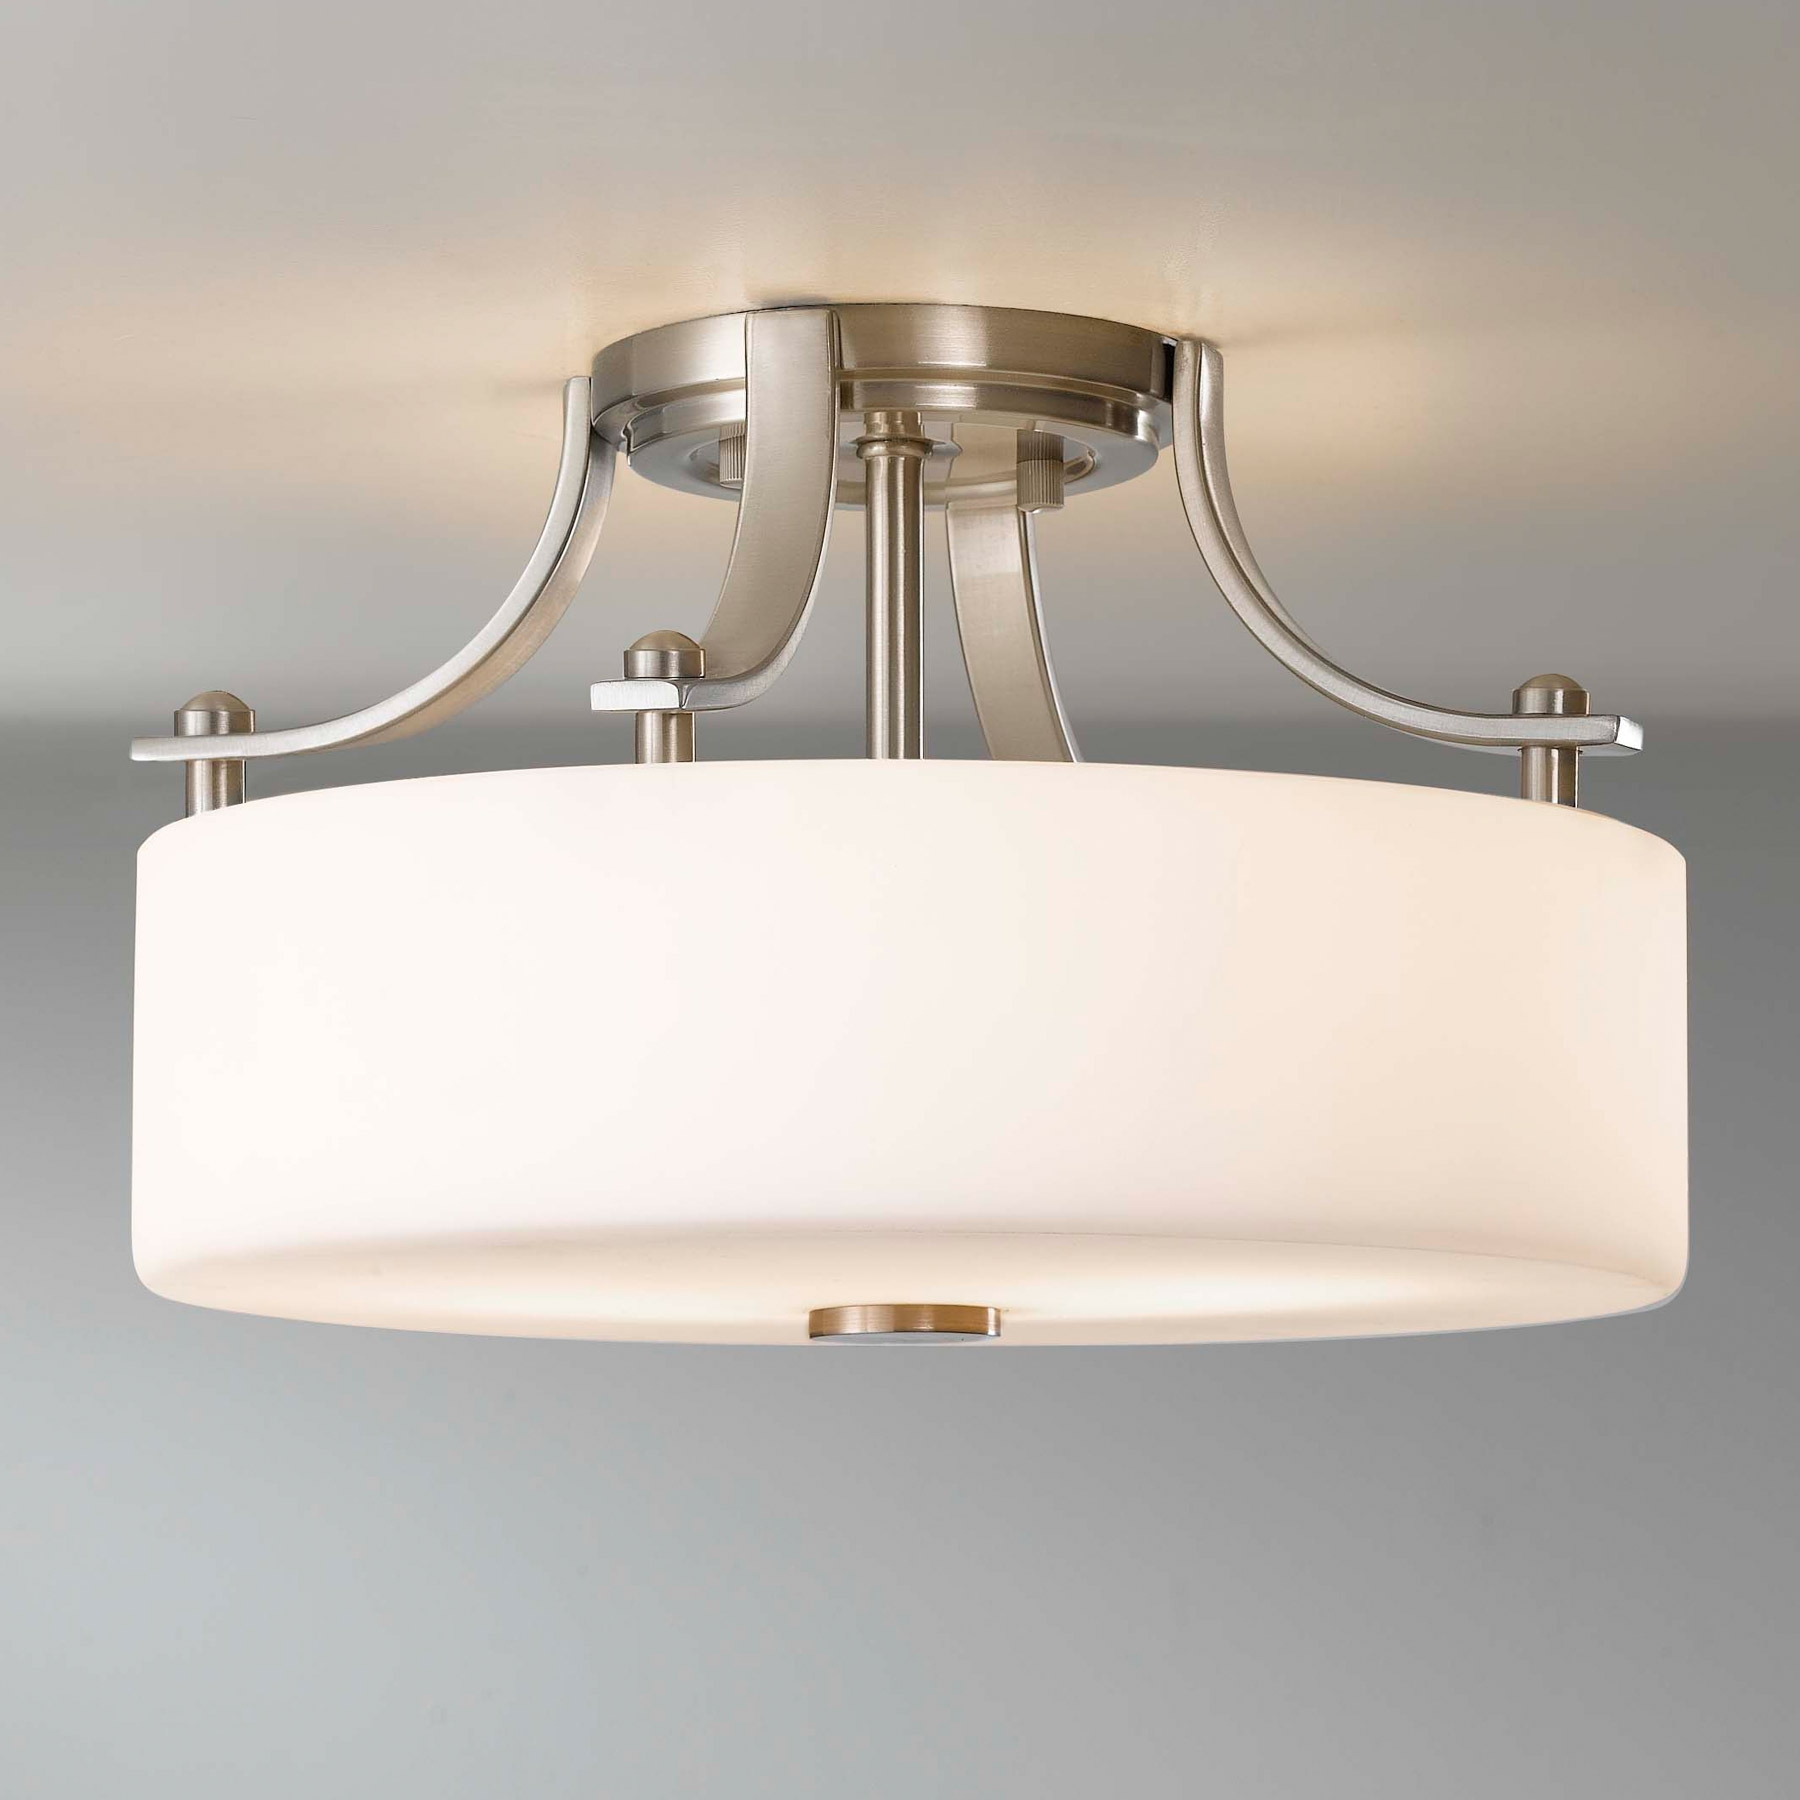 Brushed Steel Kitchen Ceiling Lightswhite flushmount light fixture flush mount ceiling light